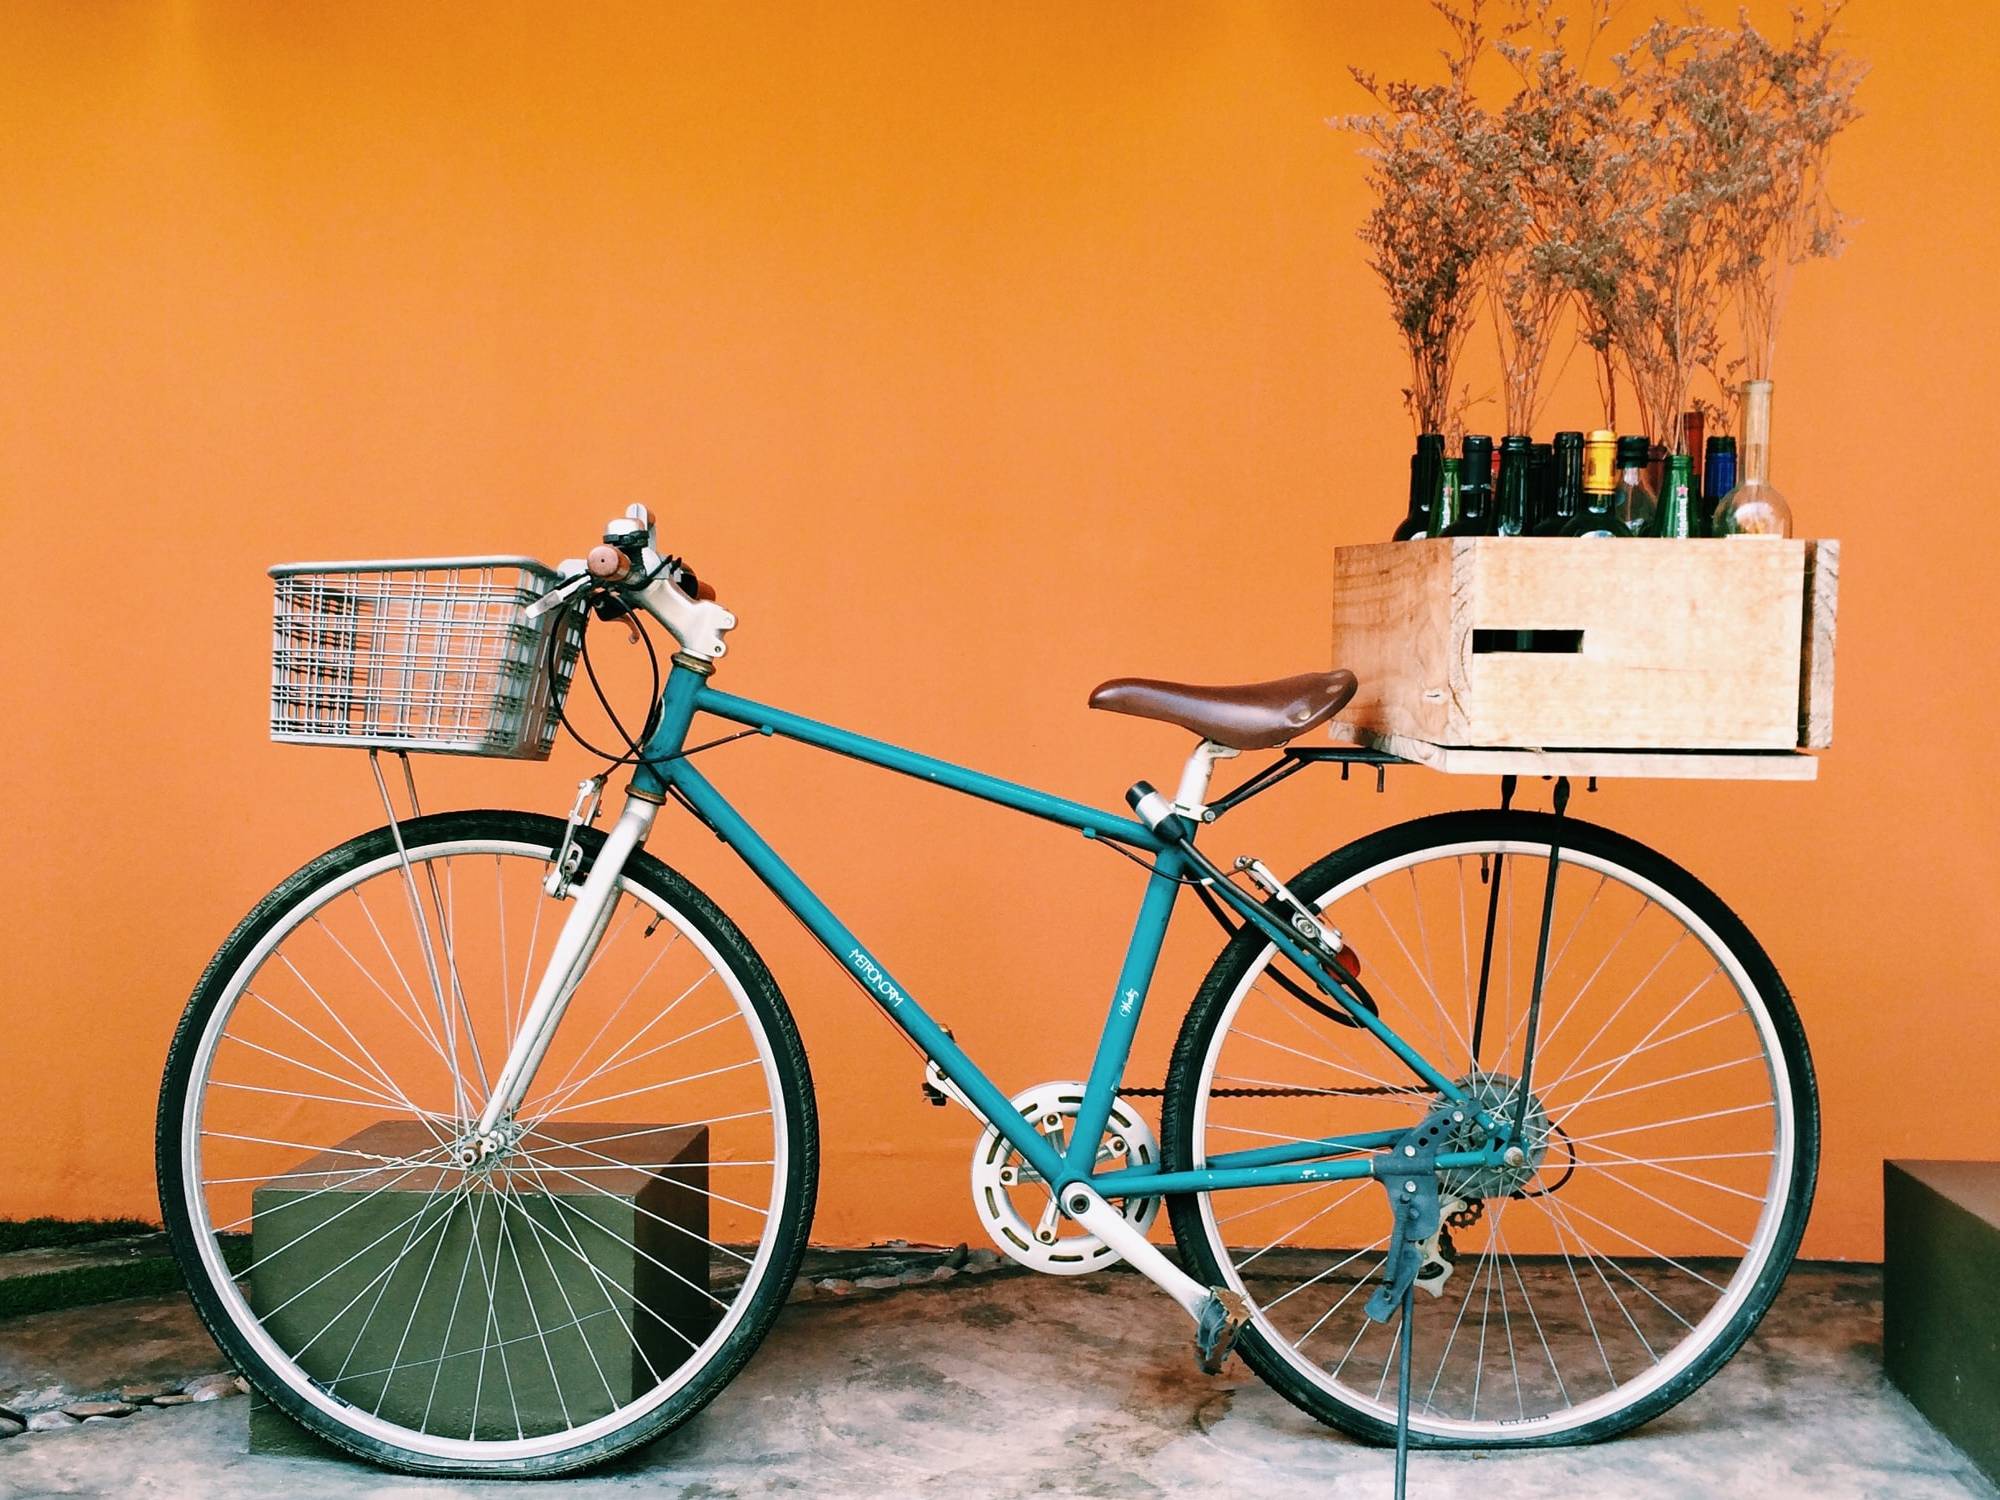 Bike with baskets